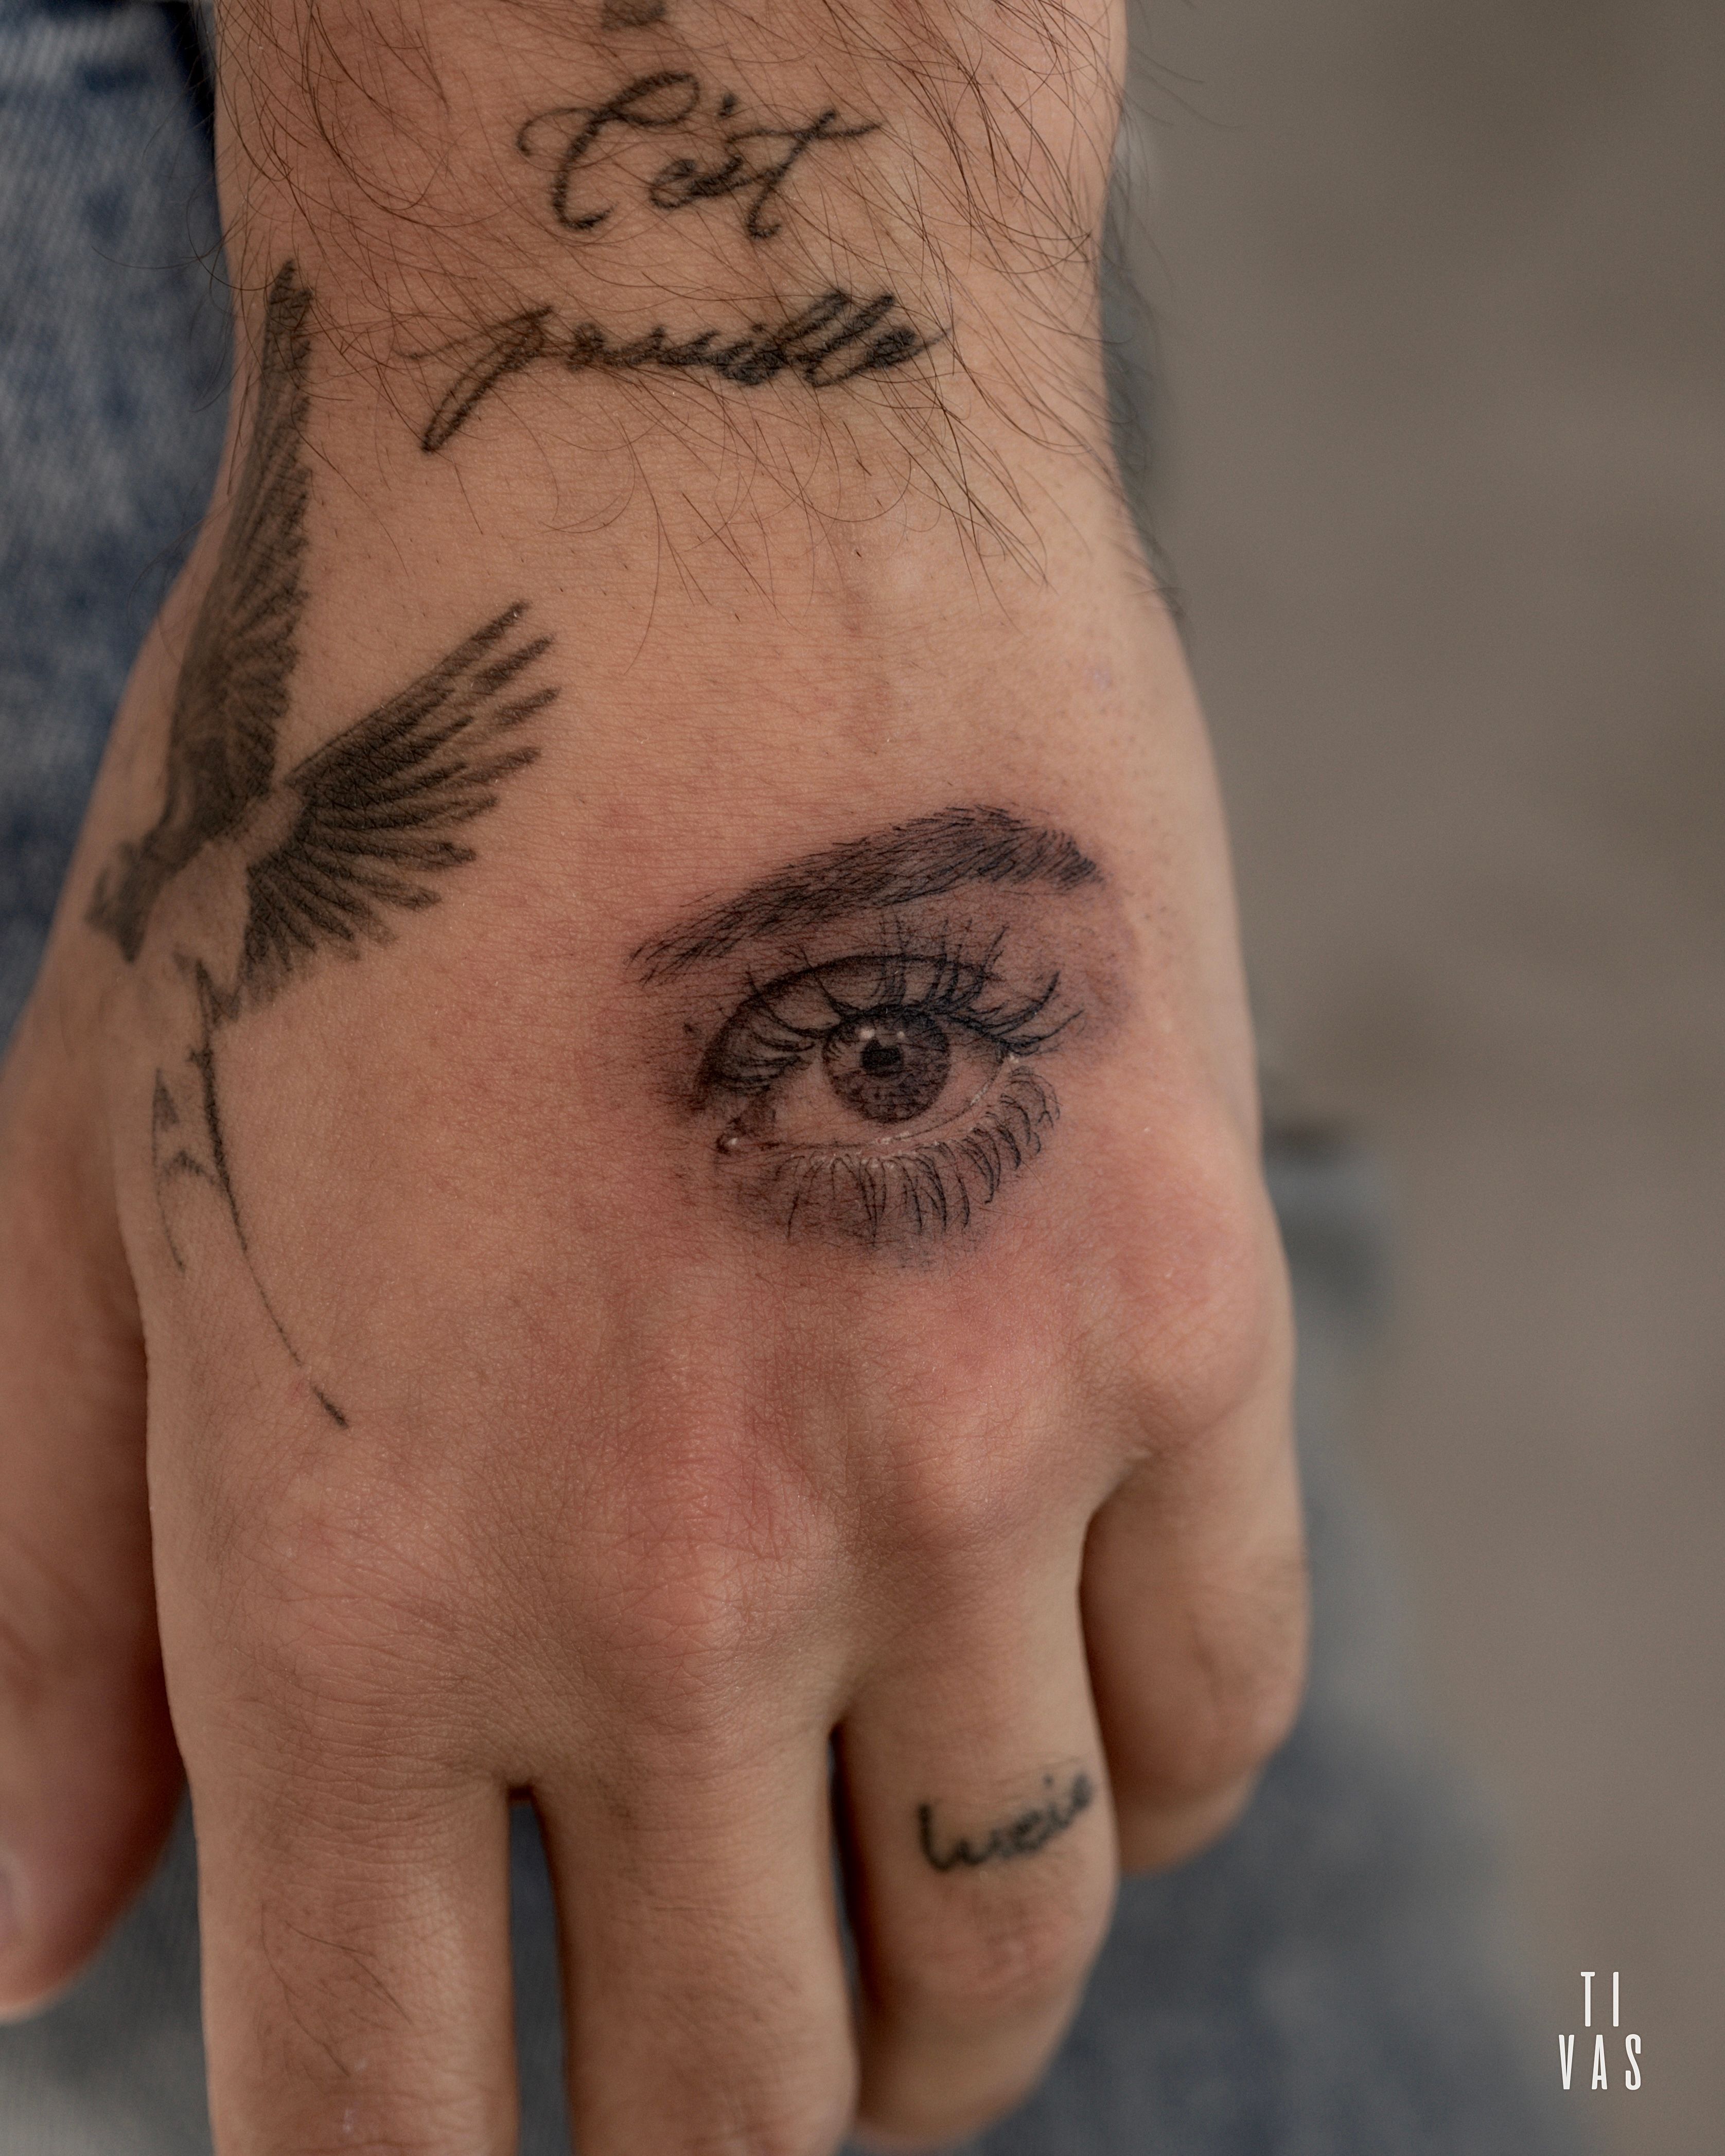 Machine Gun Kellys Tattoos Photos and Meanings